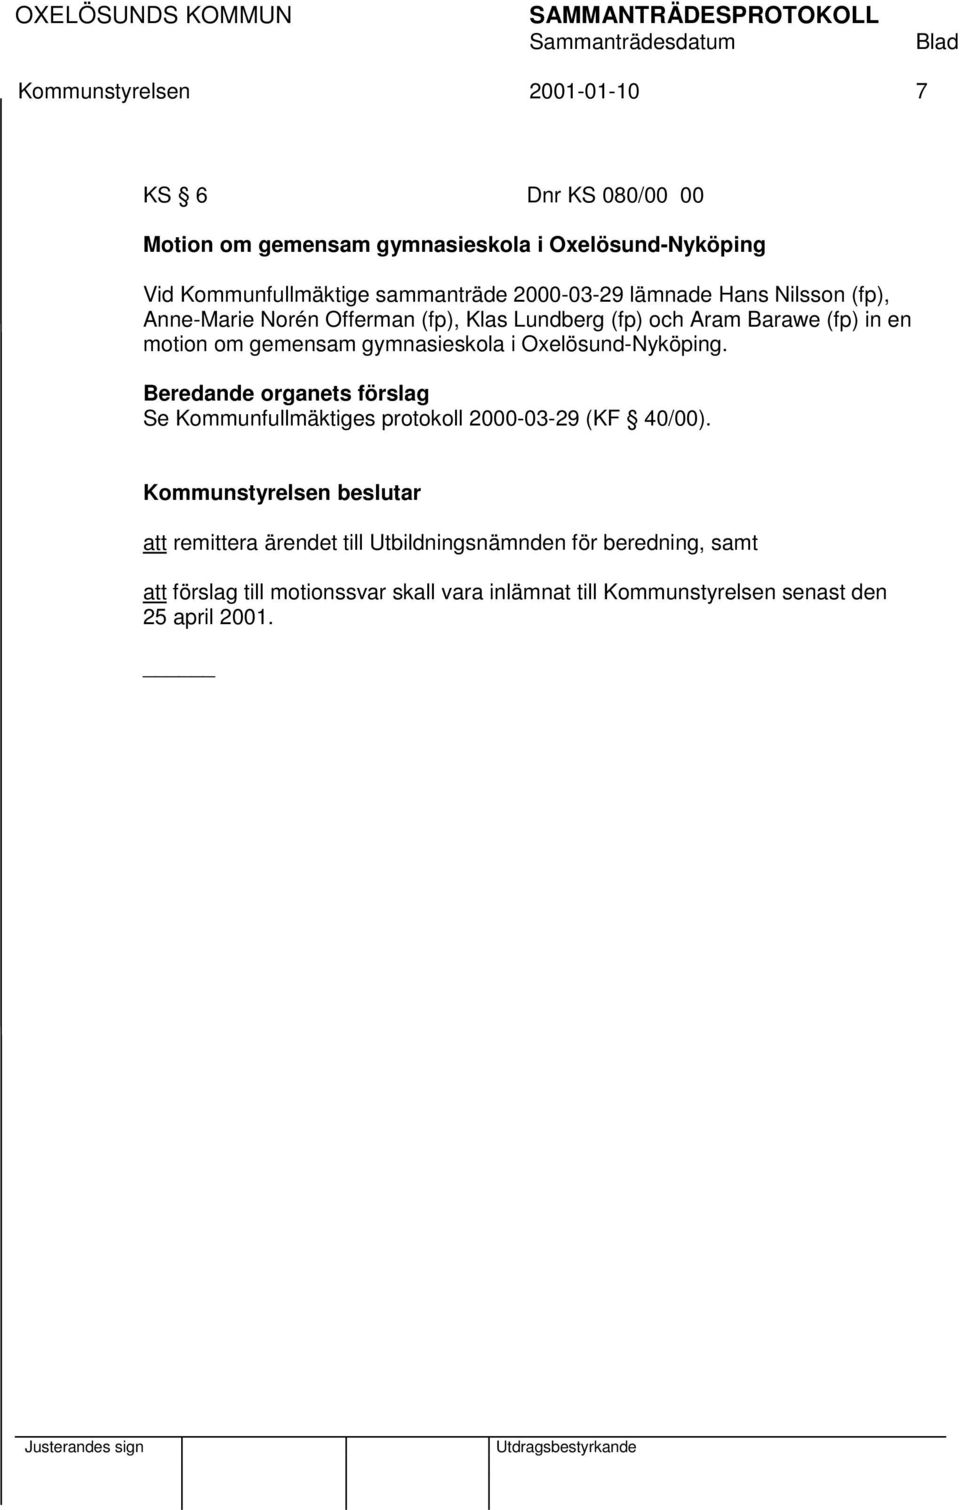 motion om gemensam gymnasieskola i Oxelösund-Nyköping. Se Kommunfullmäktiges protokoll 2000-03-29 (KF 40/00).